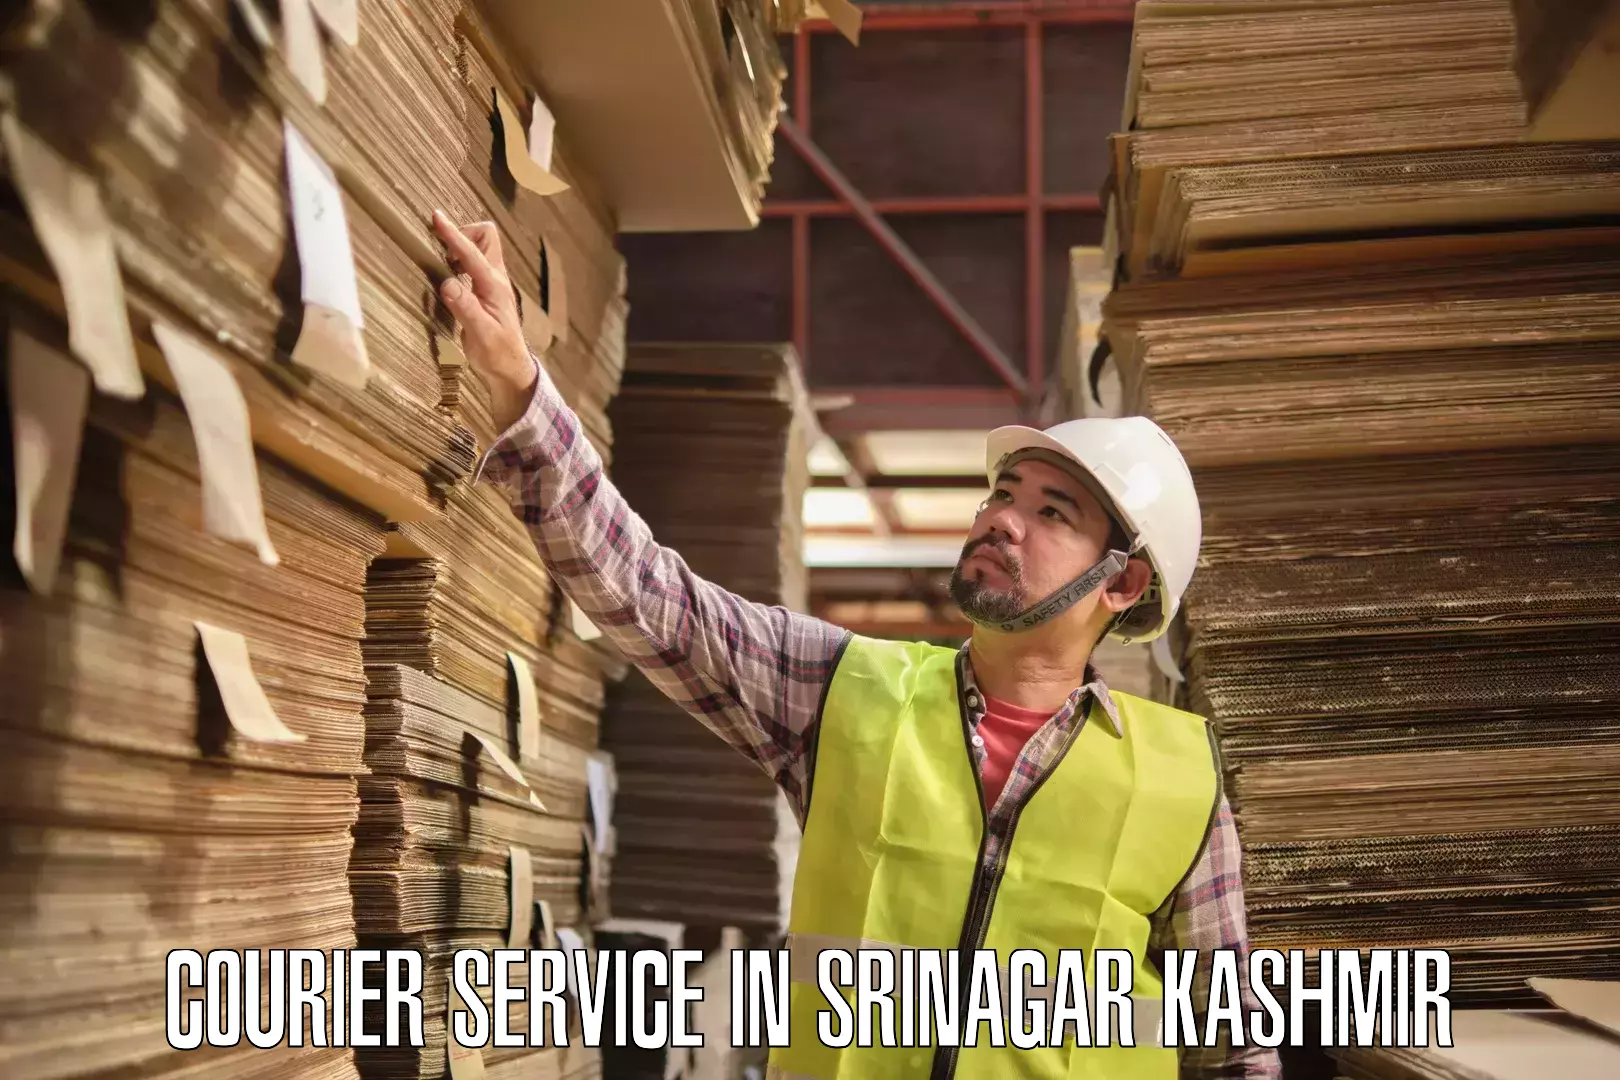 Full-service courier options in Srinagar Kashmir